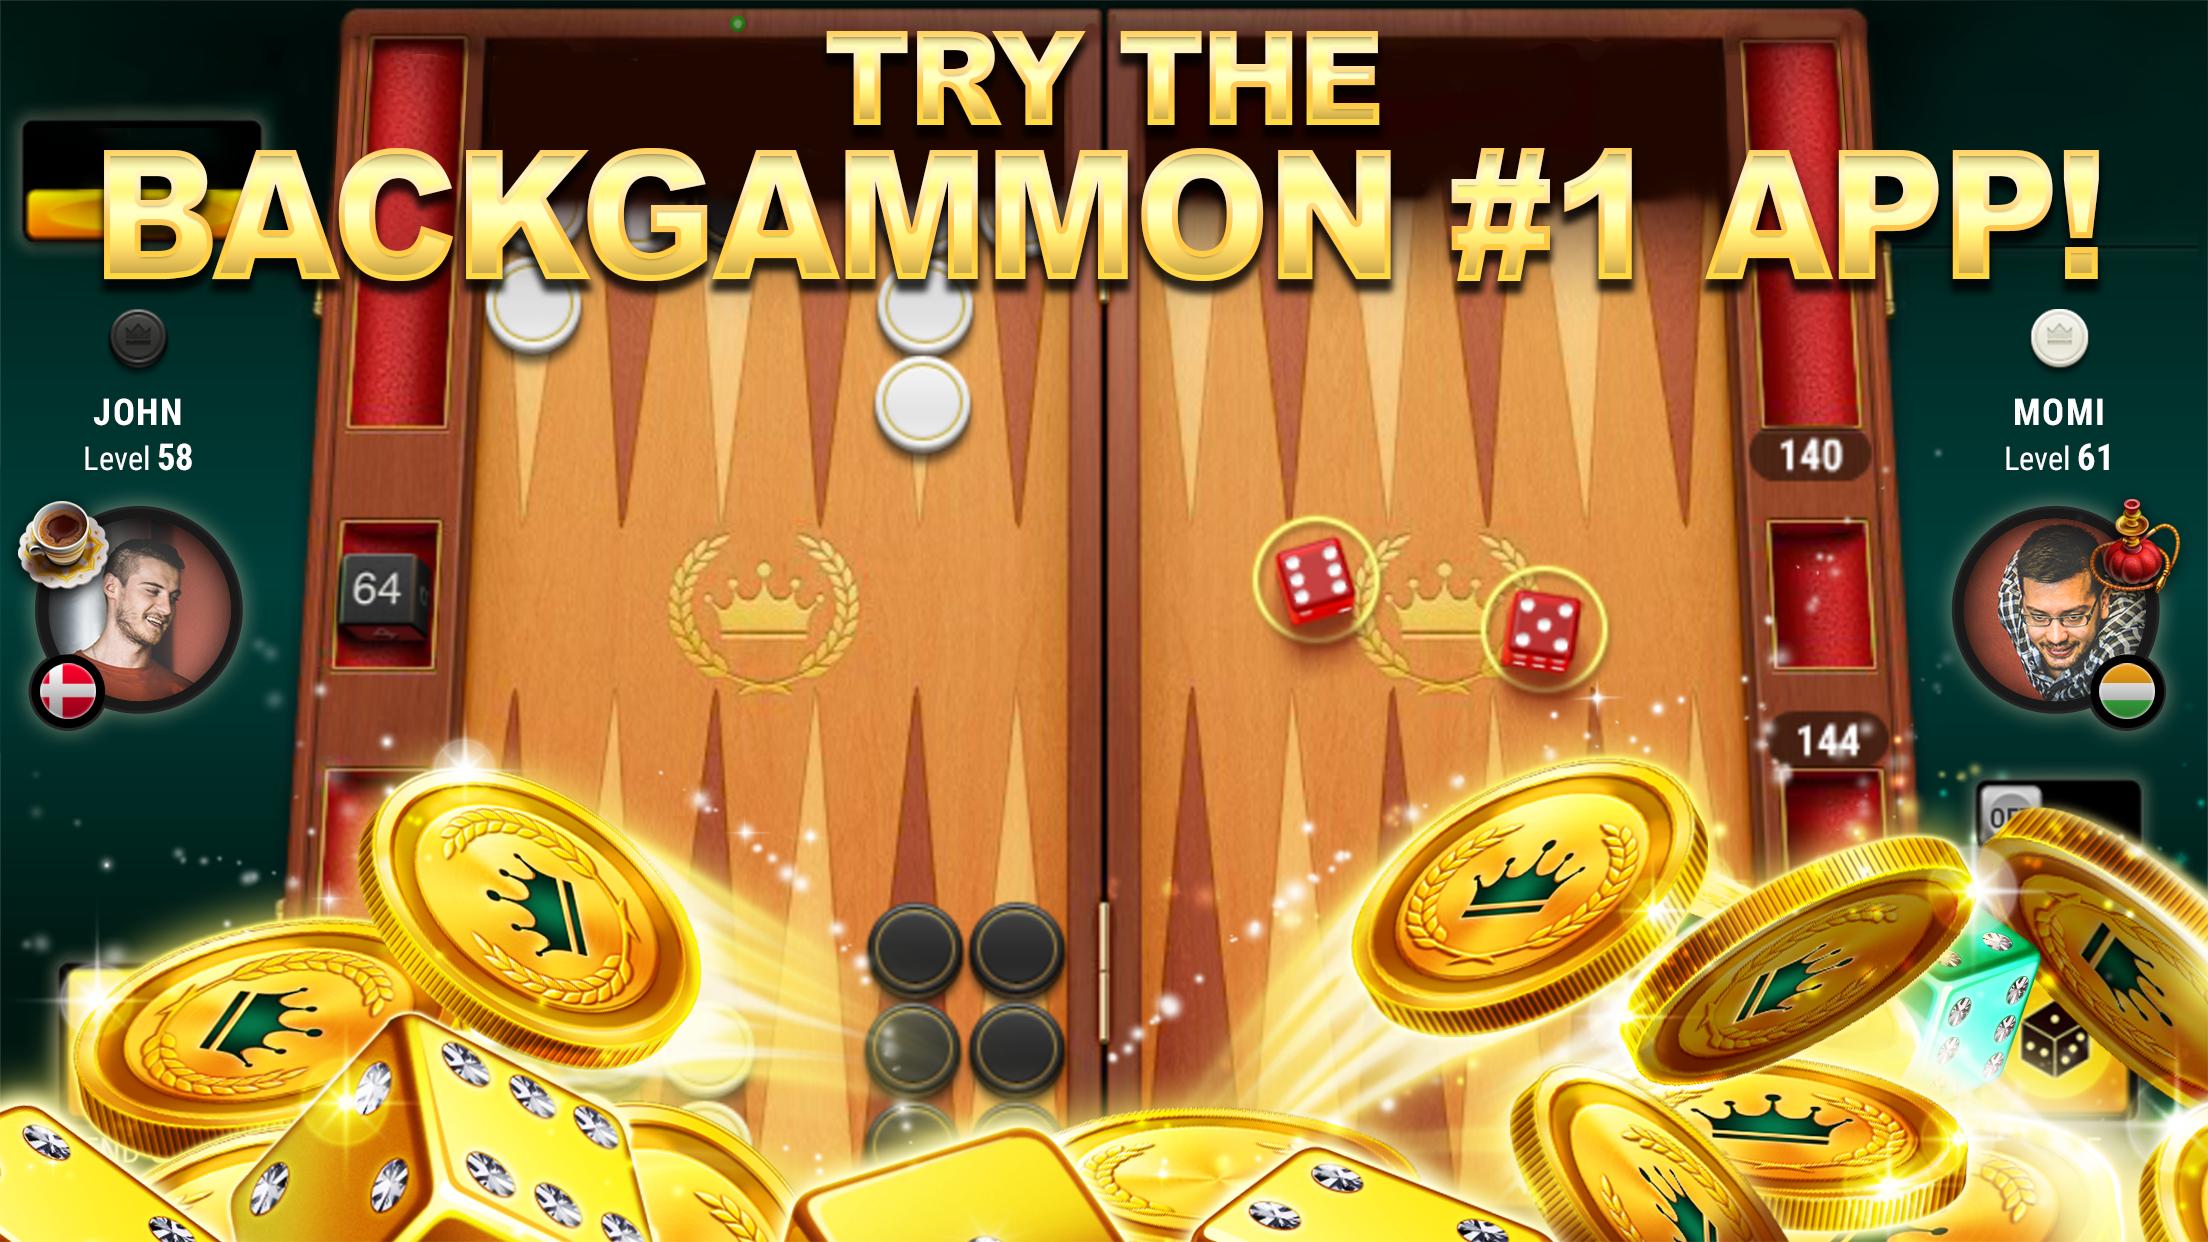 Backgammon Live - Play Online Free Backgammon 3.5.245 Screenshot 1